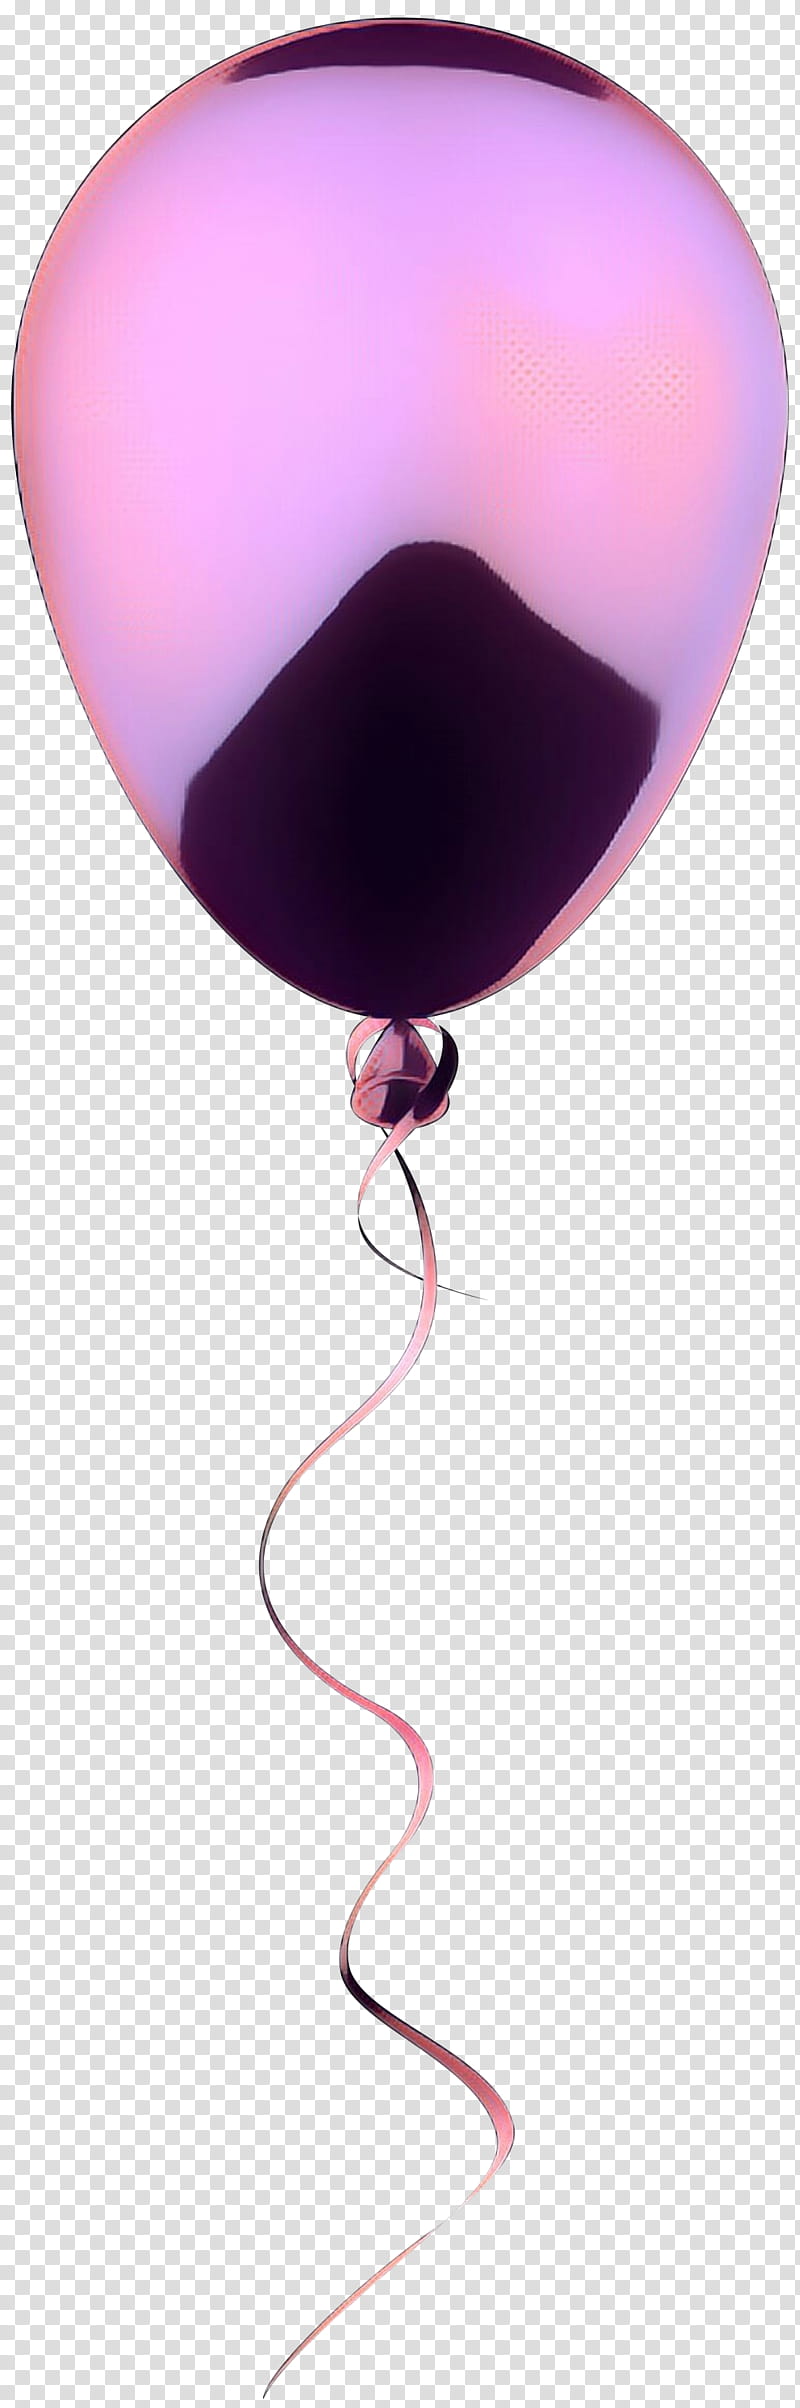 Hot Air Balloon, Pop Art, Retro, Vintage, Light, Light Fixture, Pink M, Violet transparent background PNG clipart